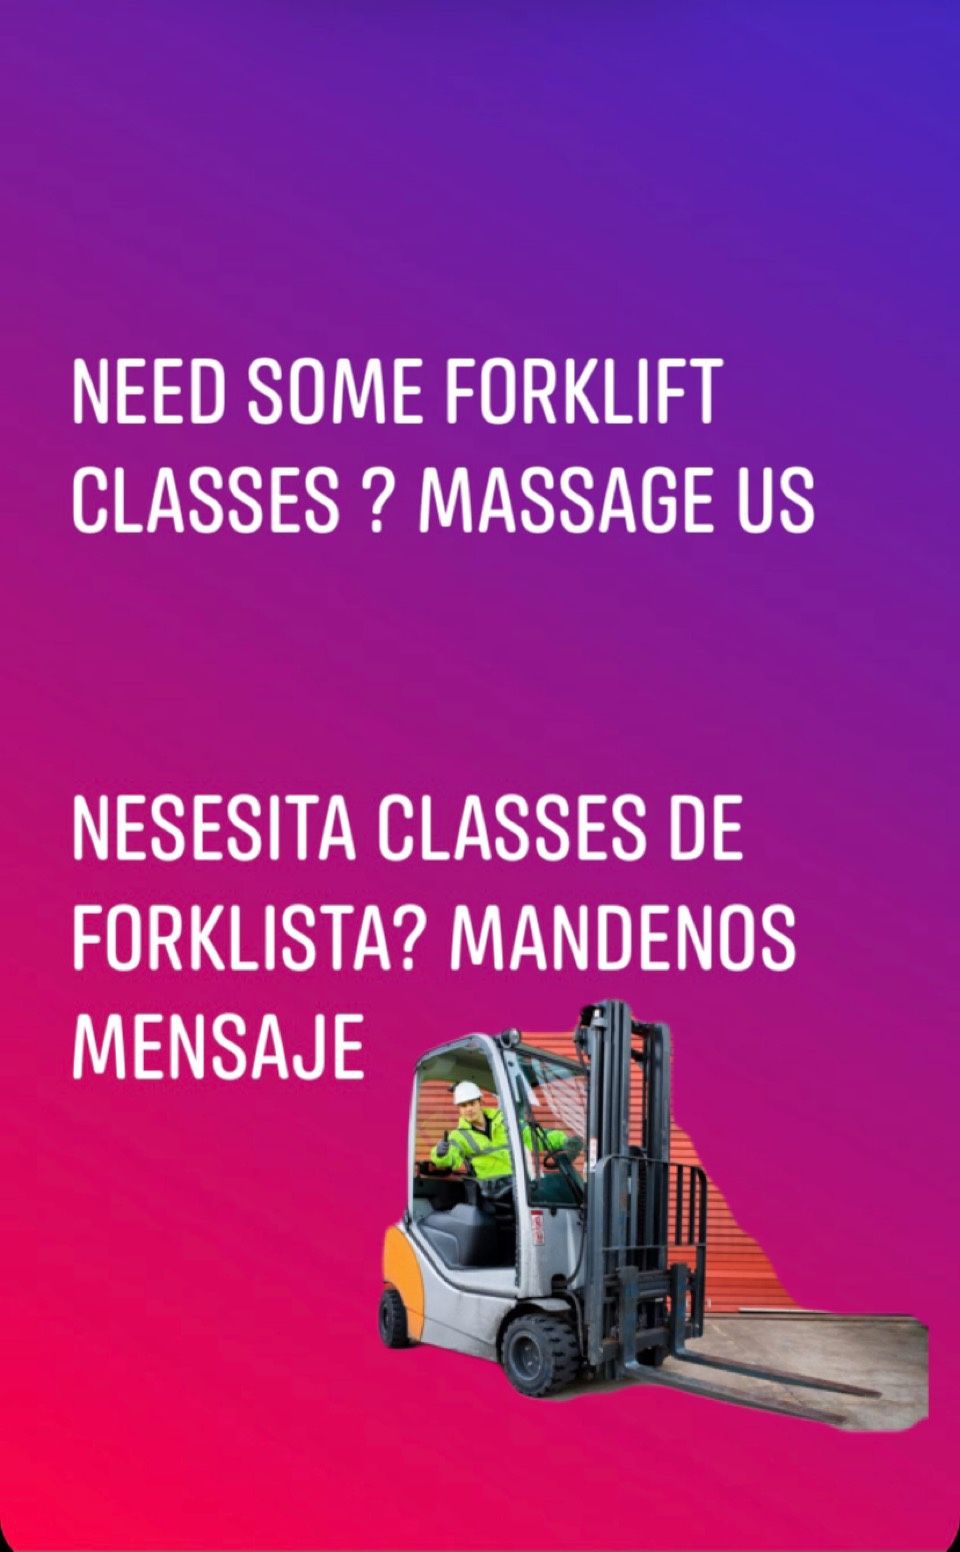 Forklift Classes / Forklista Classes 